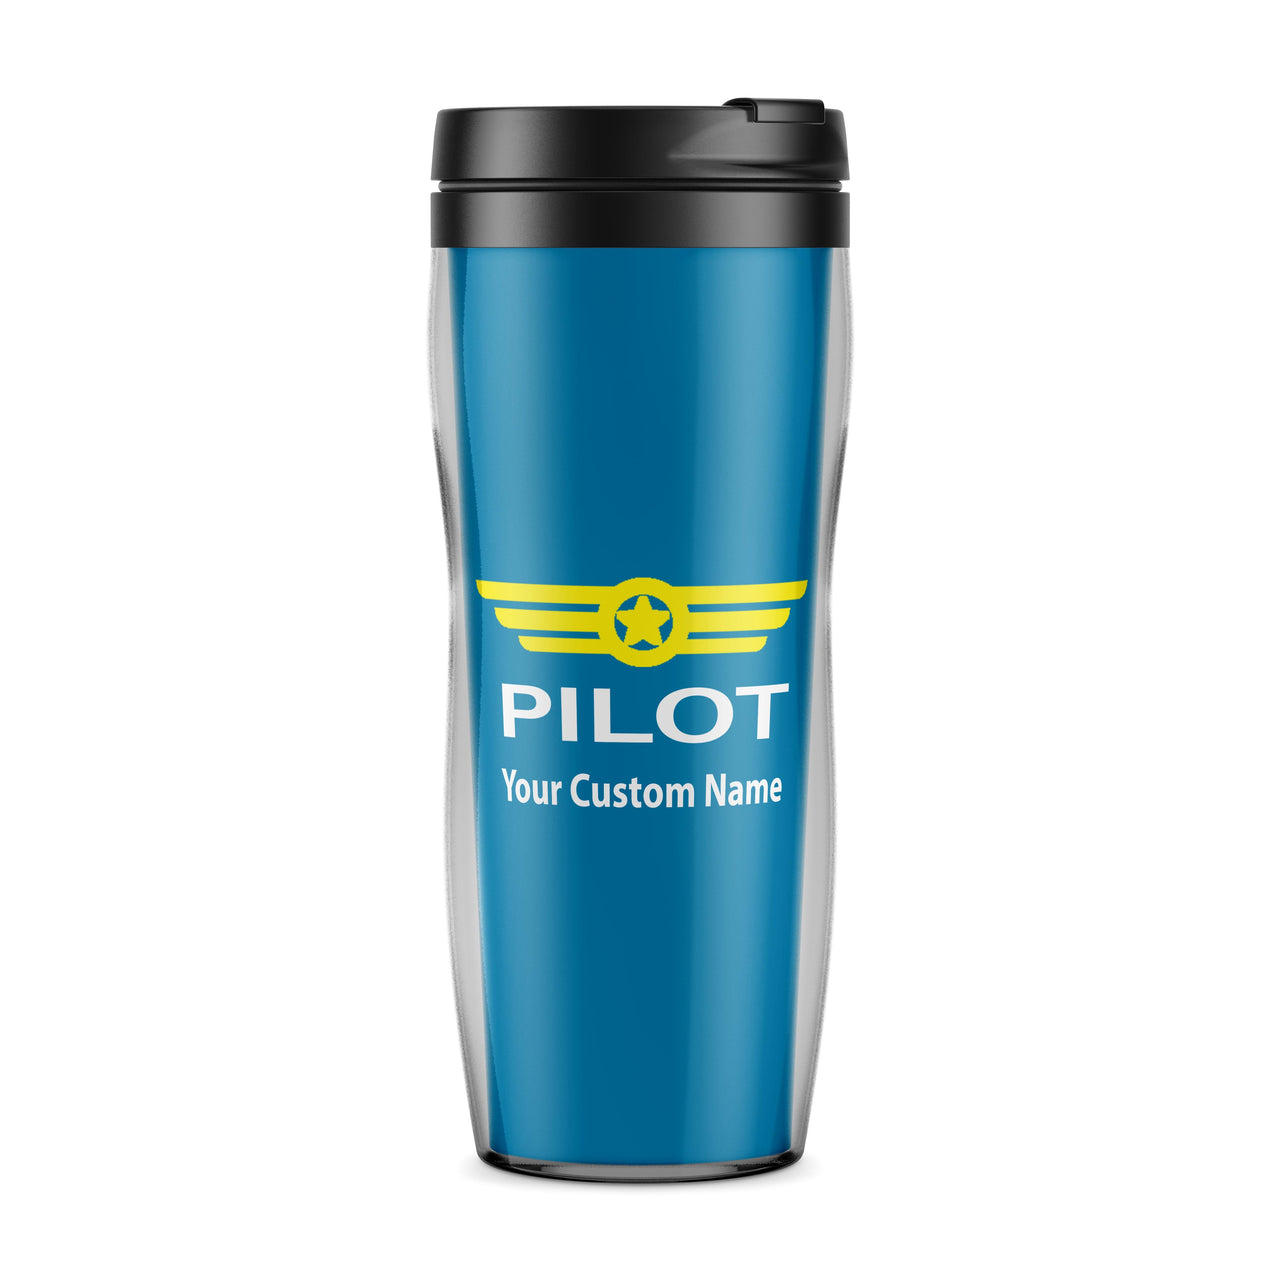 Custom Name & Pilot & Badge Designed Plastic Travel Mugs